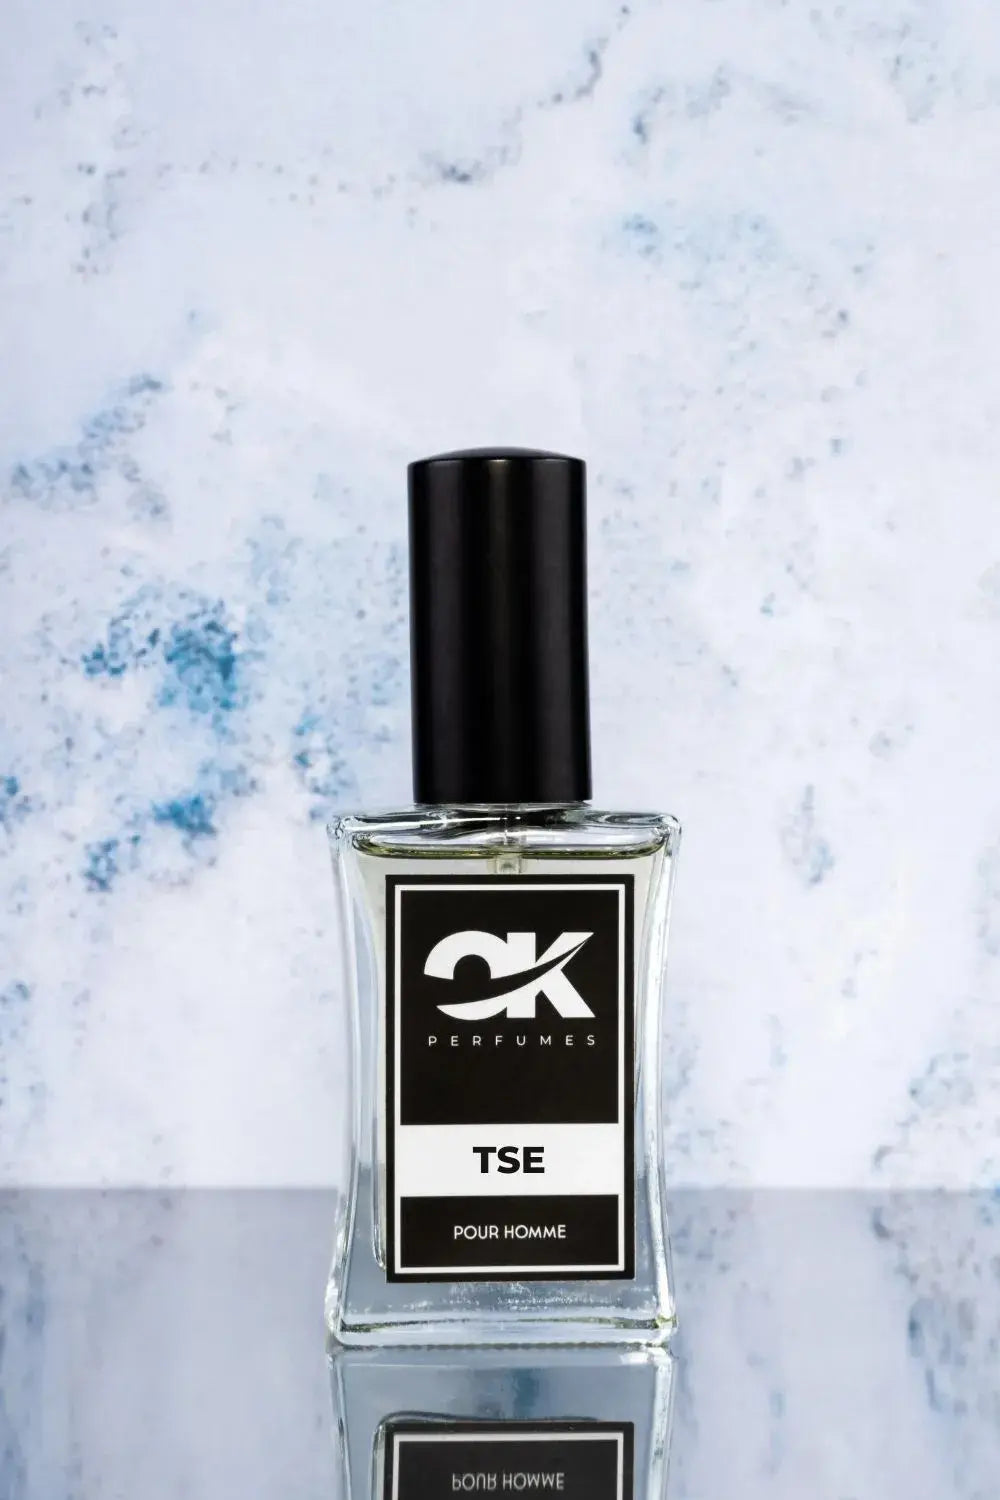 TSE - Reminiscente do perfume de Hugo Boss